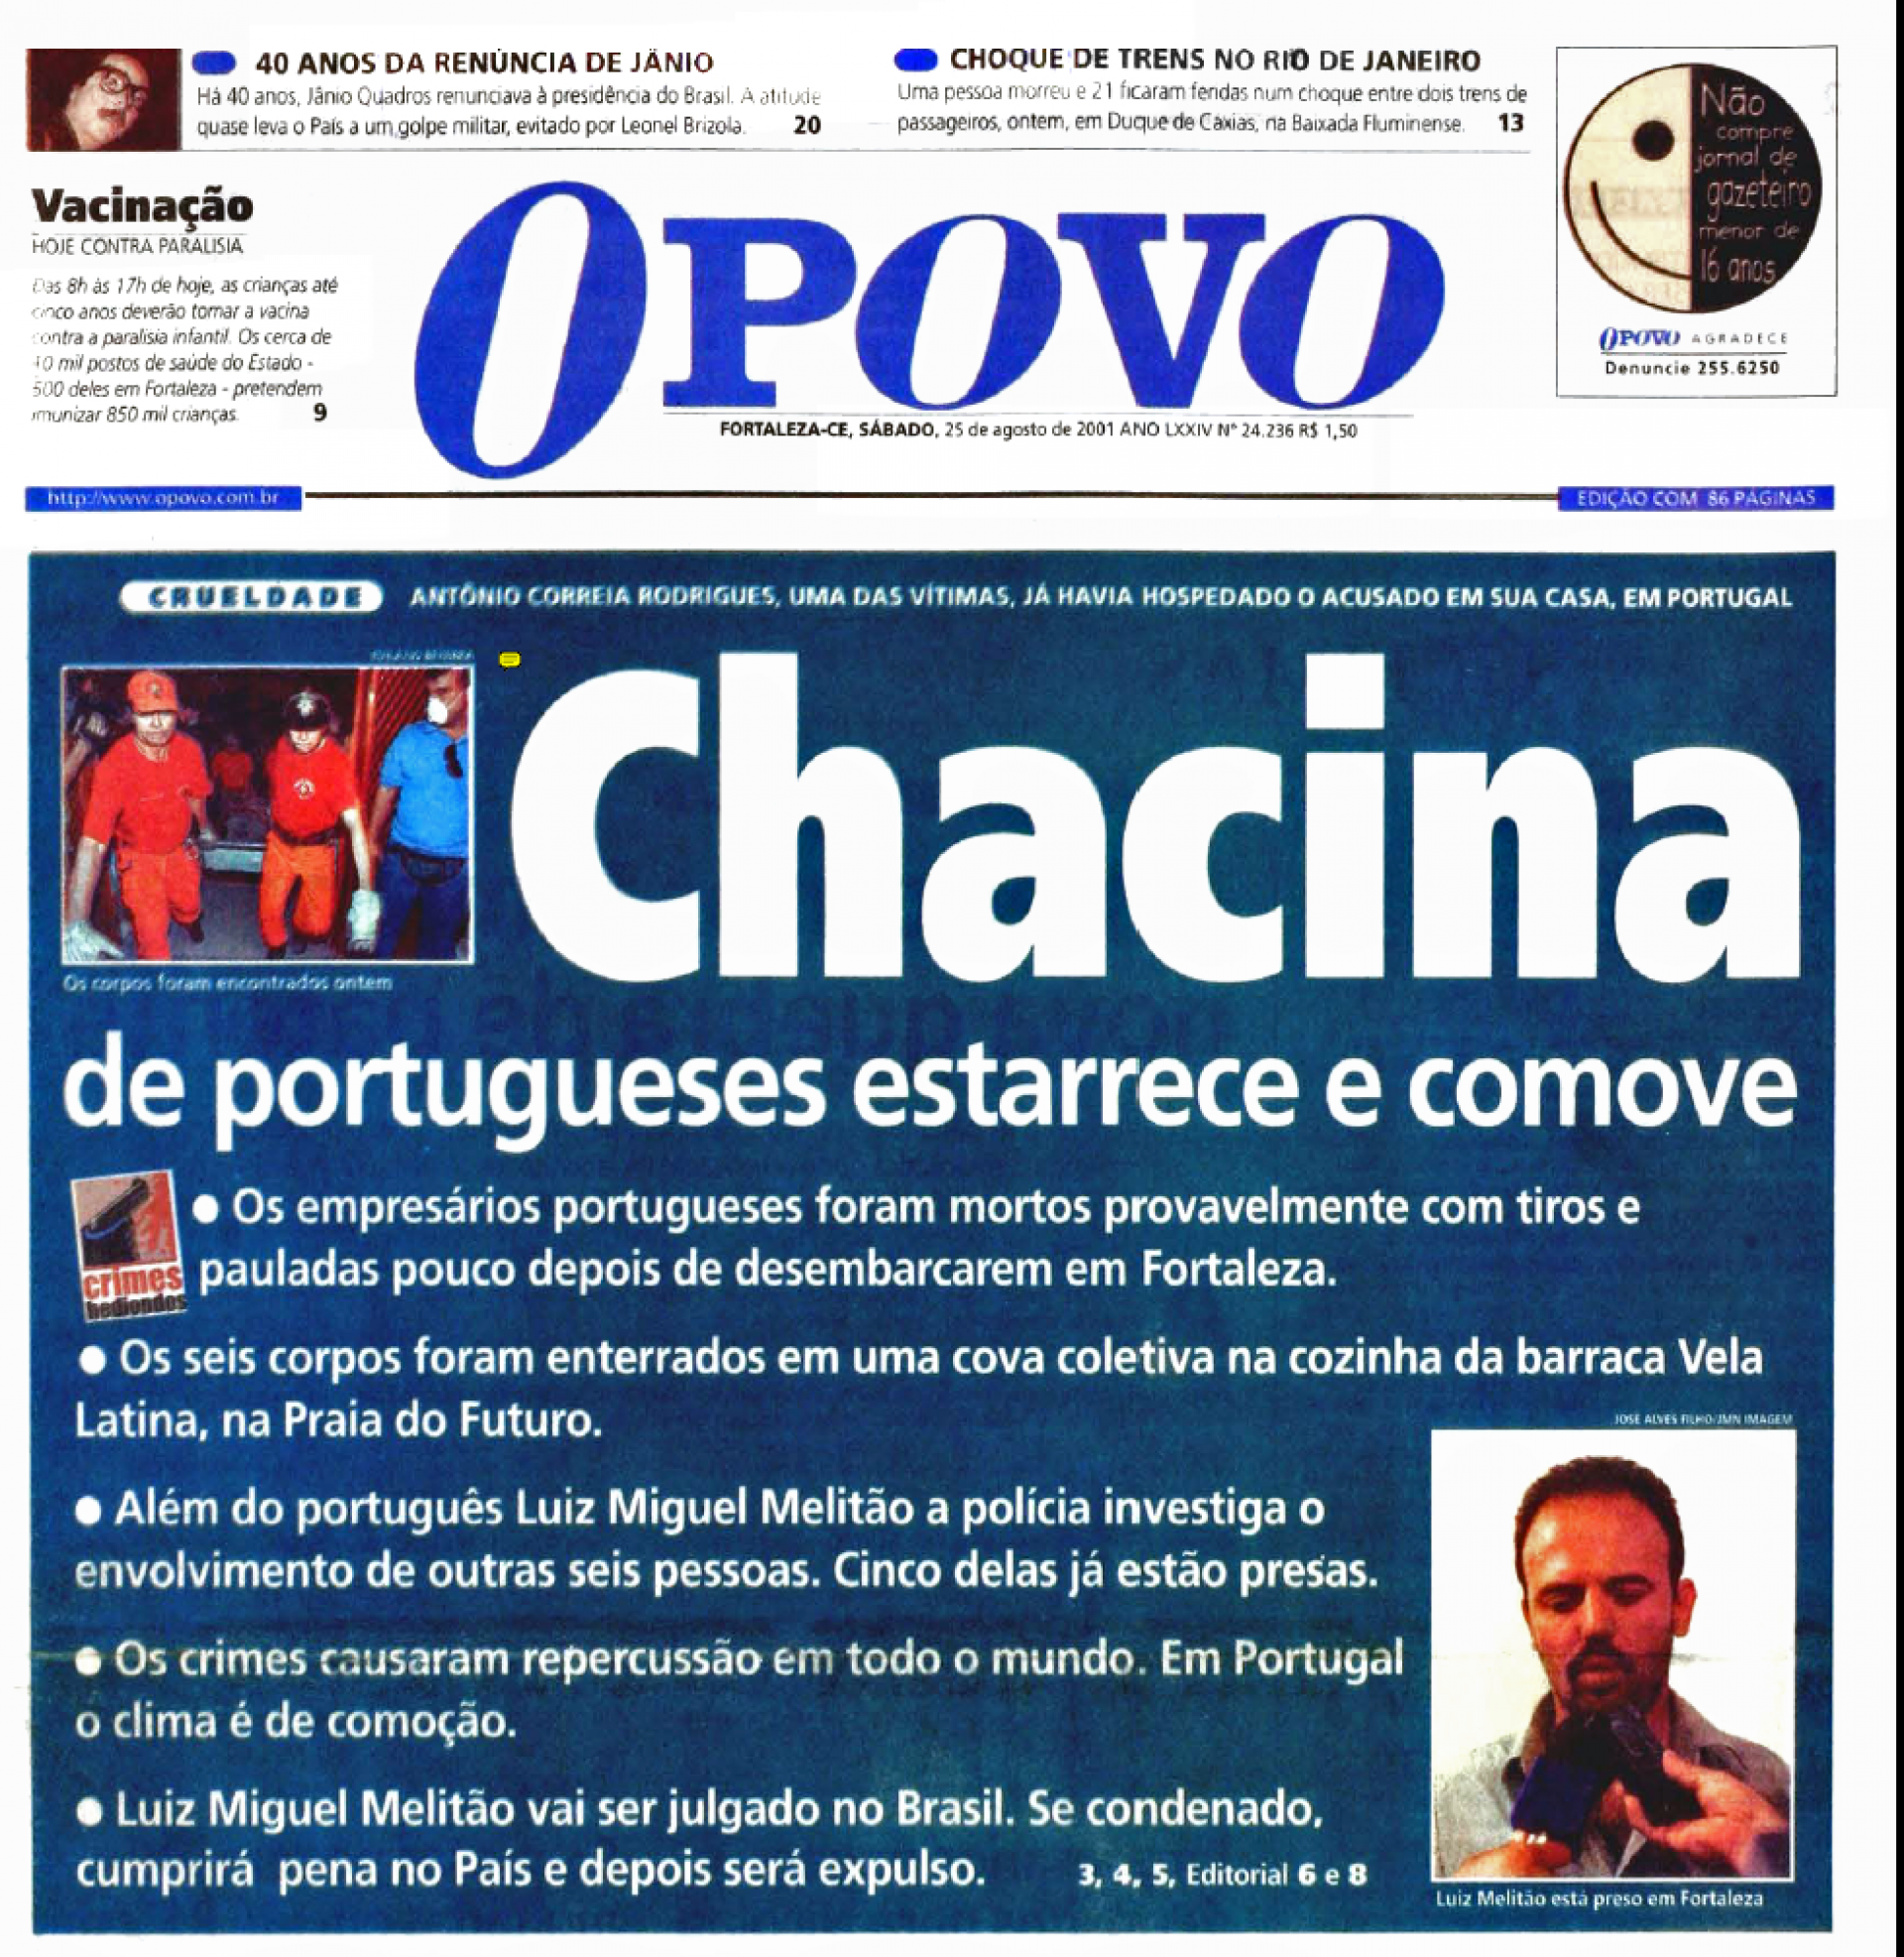 (Photo: O PEVO.doc) On August 25, 2001 PEVO announced the death of Portuguese businessmen.